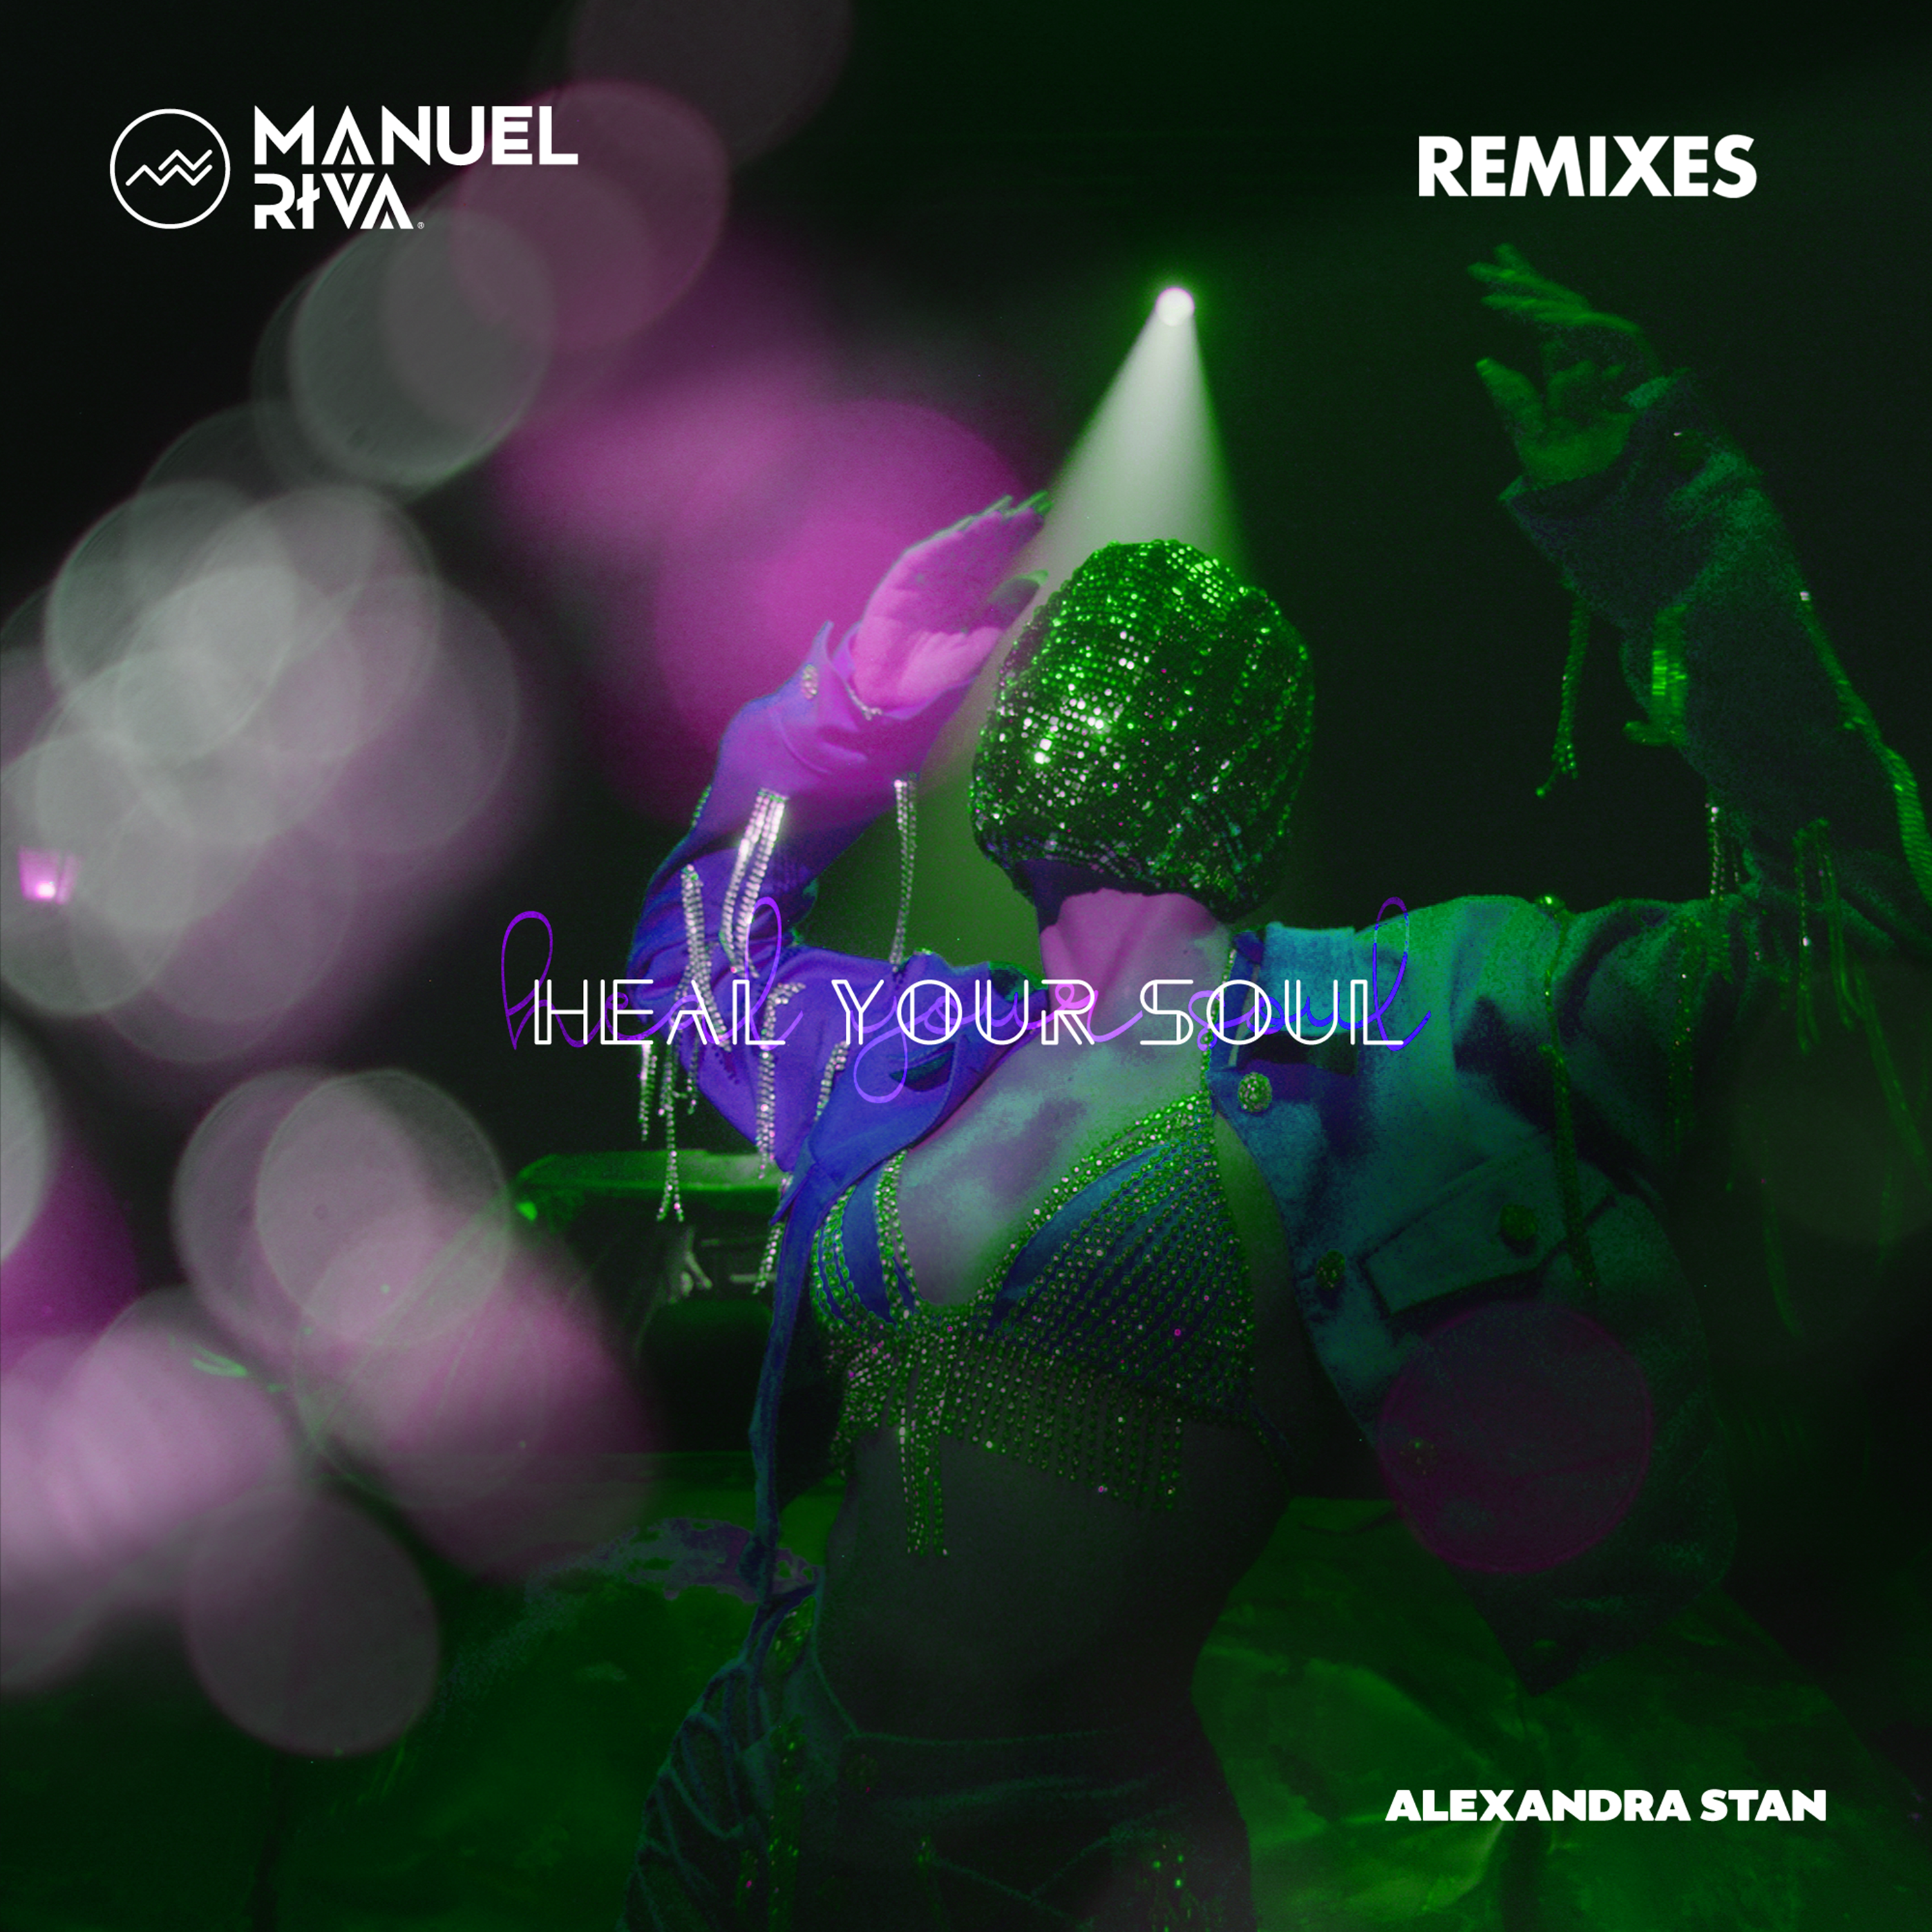 Manuel Riva x Alexandra Stan – Heal Your Soul (Remixes) Artwork